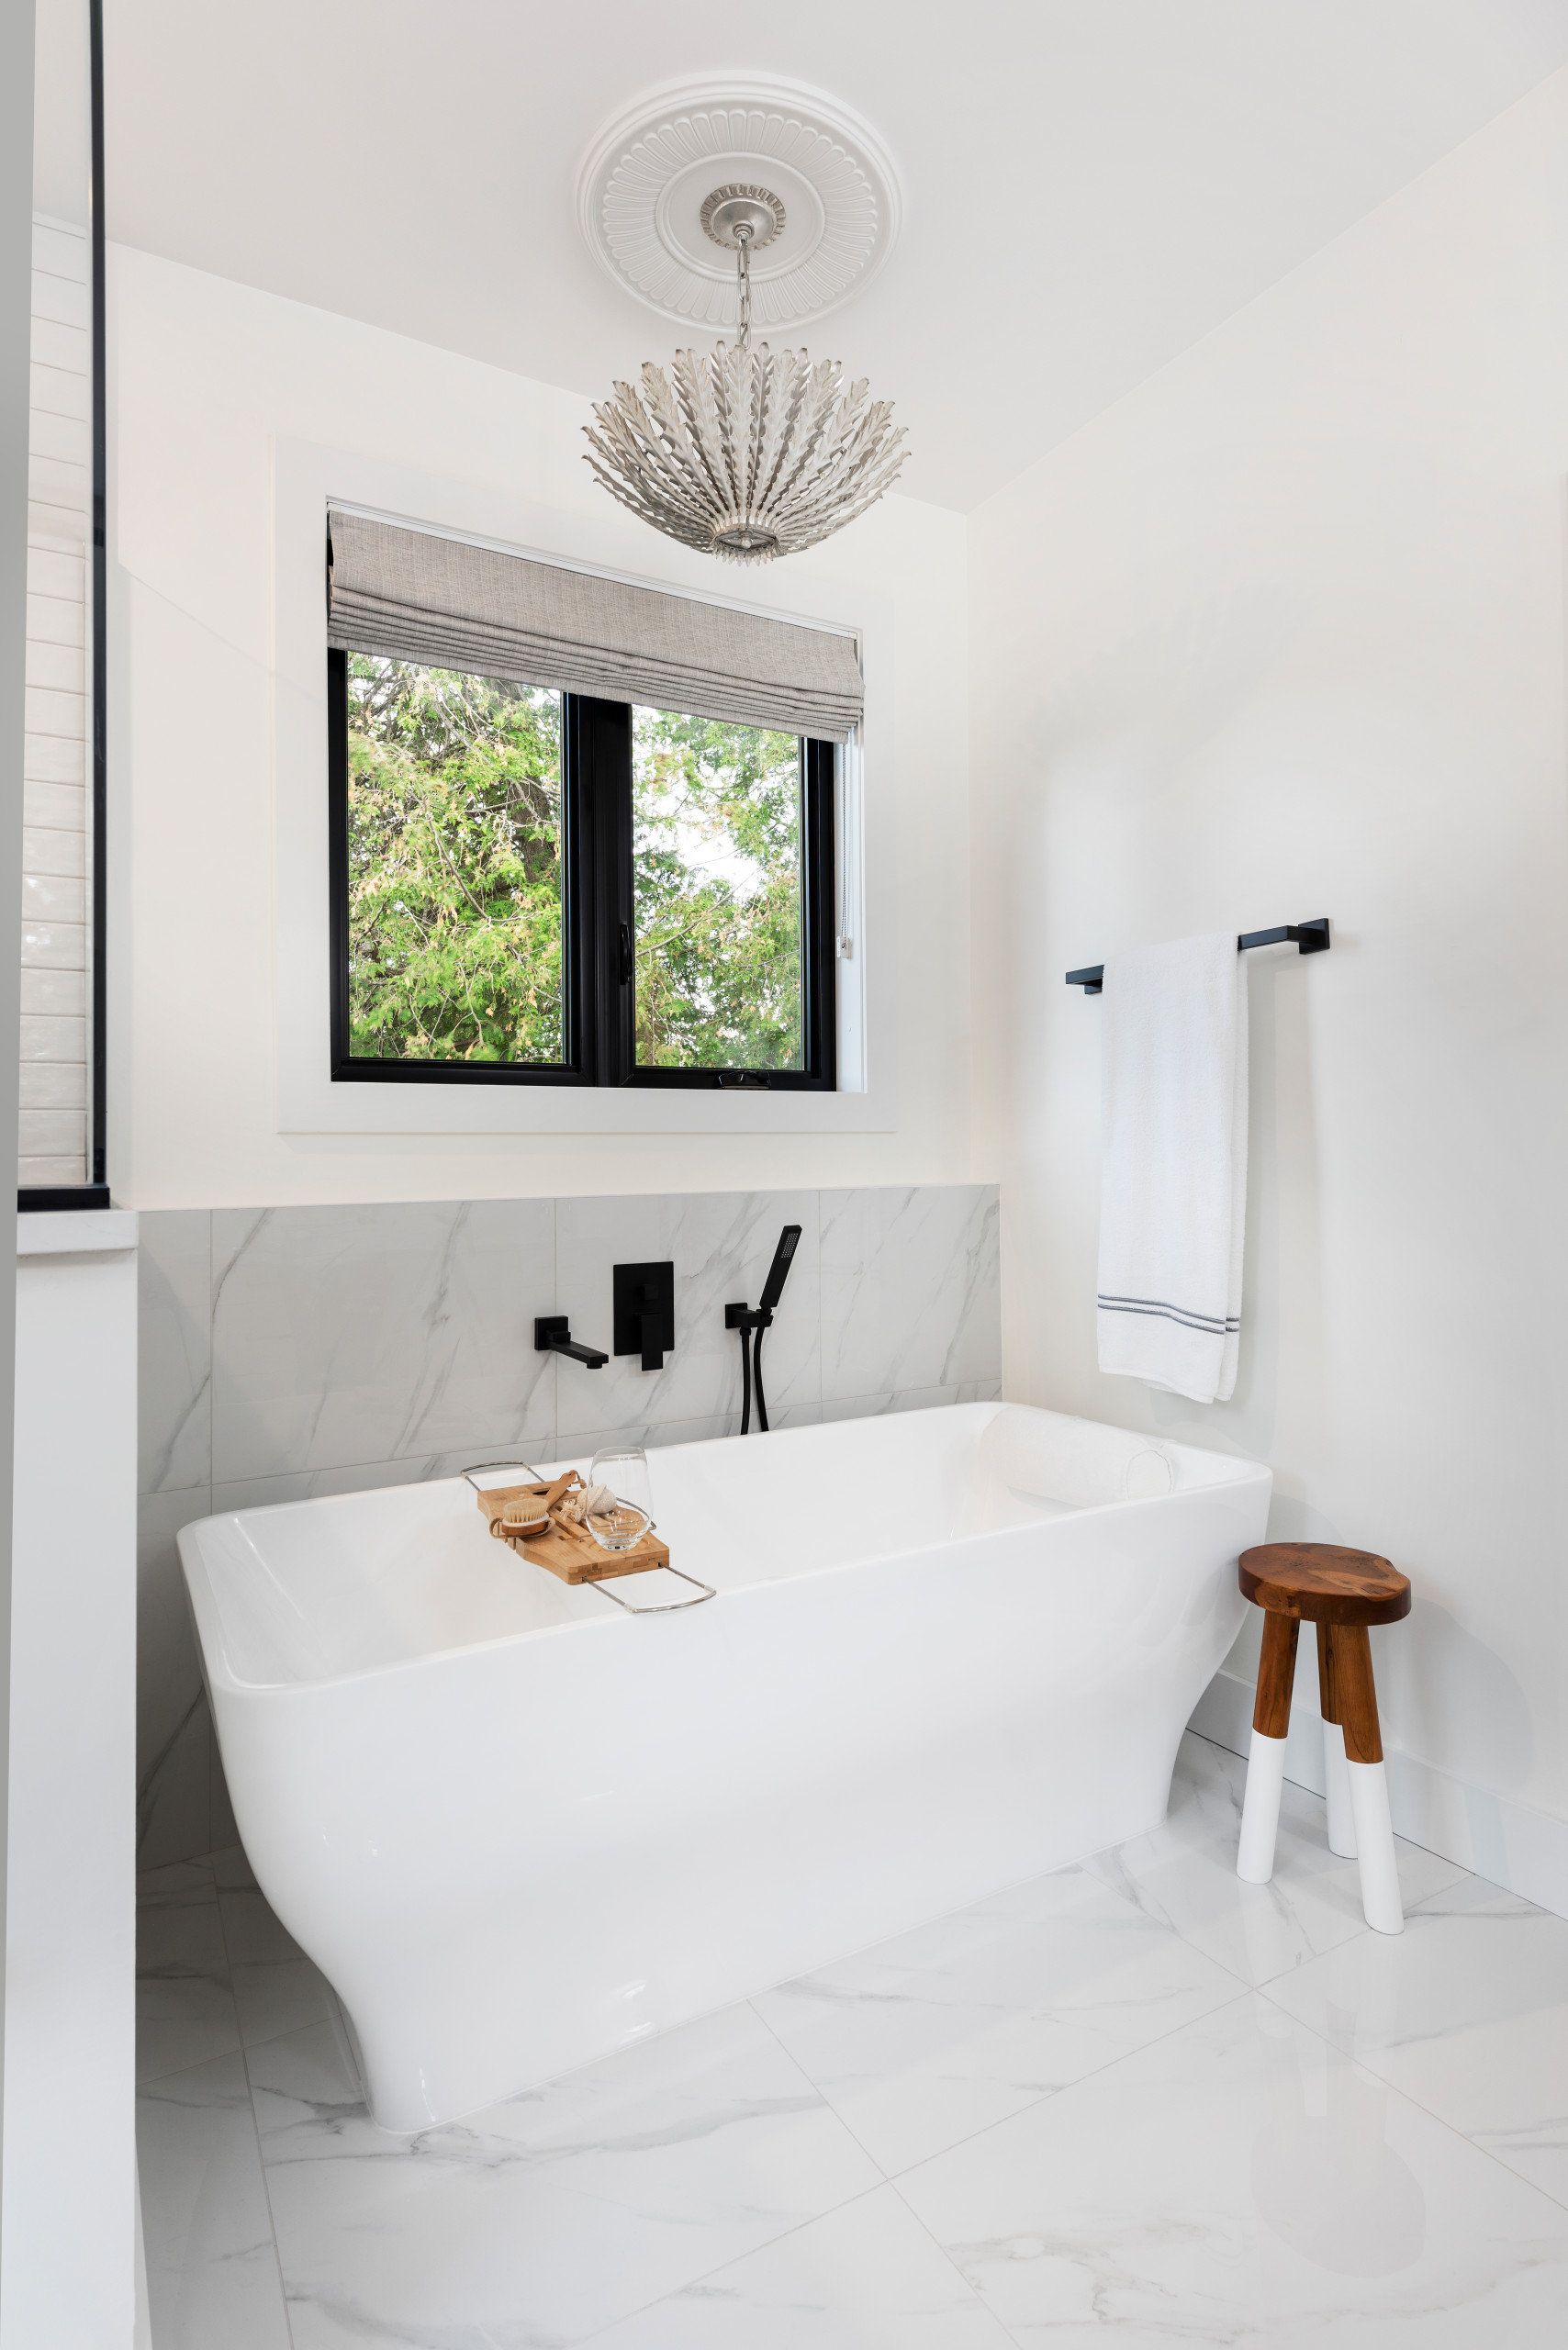 Personal Spa Bath - Contemporary - Bathroom - Denver - by Ashley Campbell Interior  Design